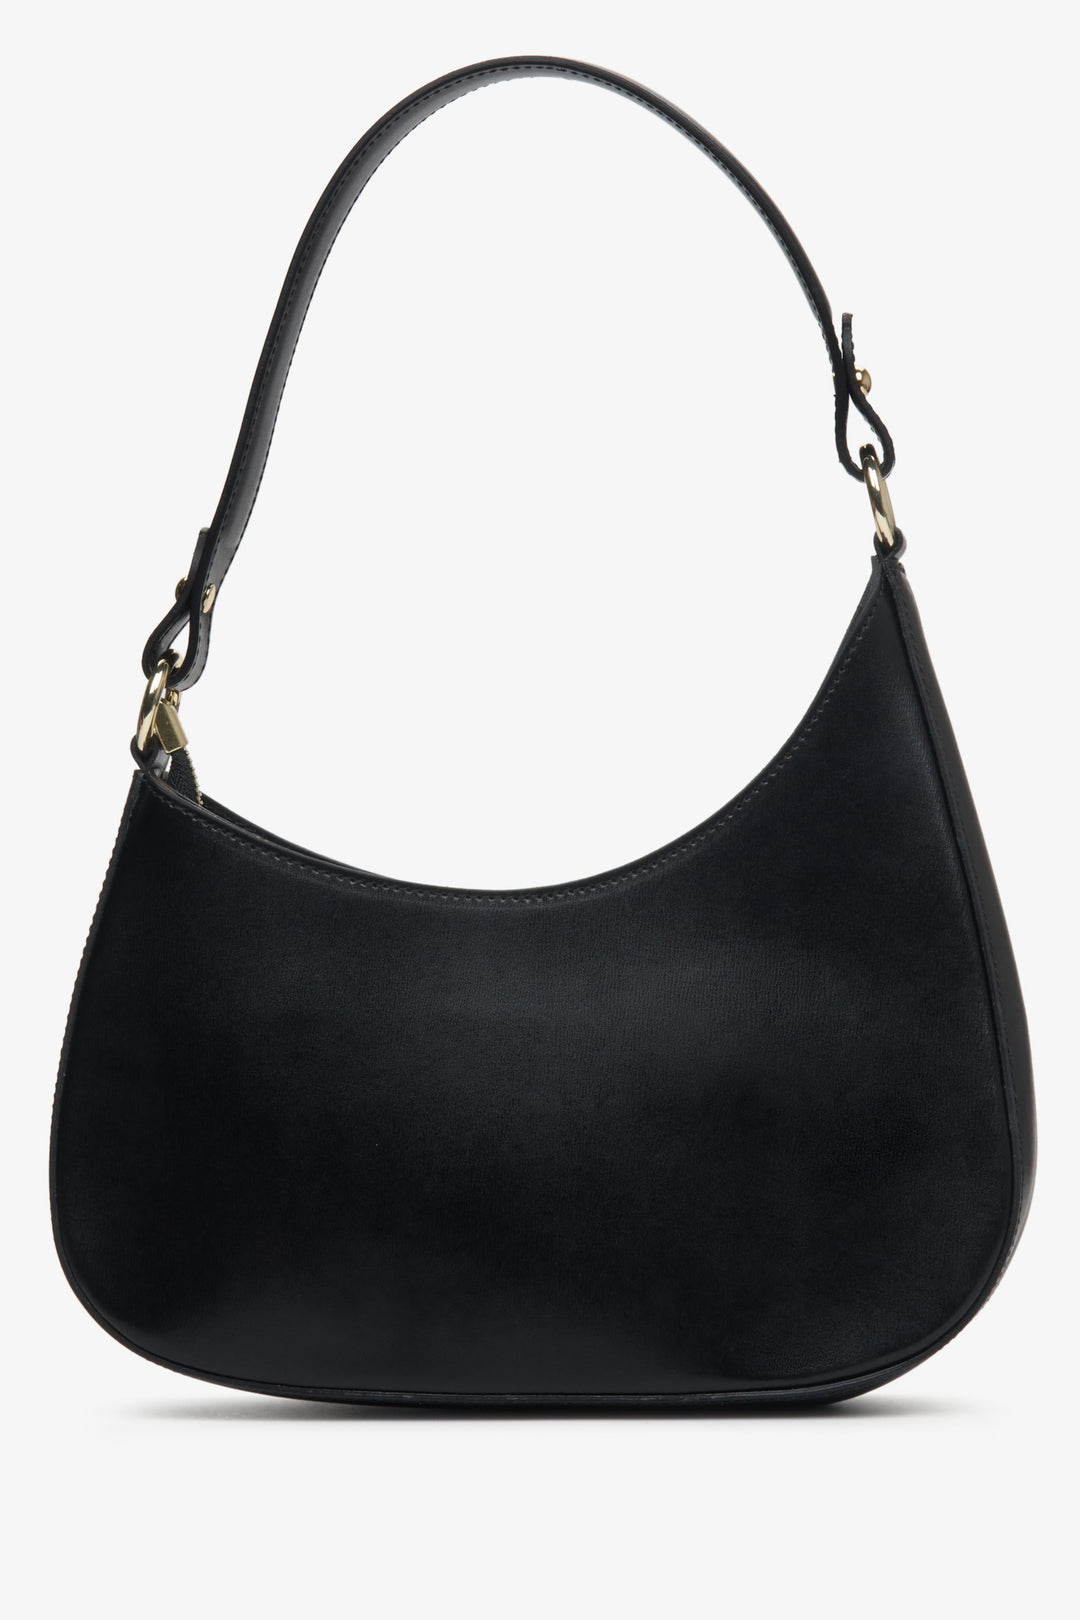 Estro women's handbag in black natural leather sewn in Italy.